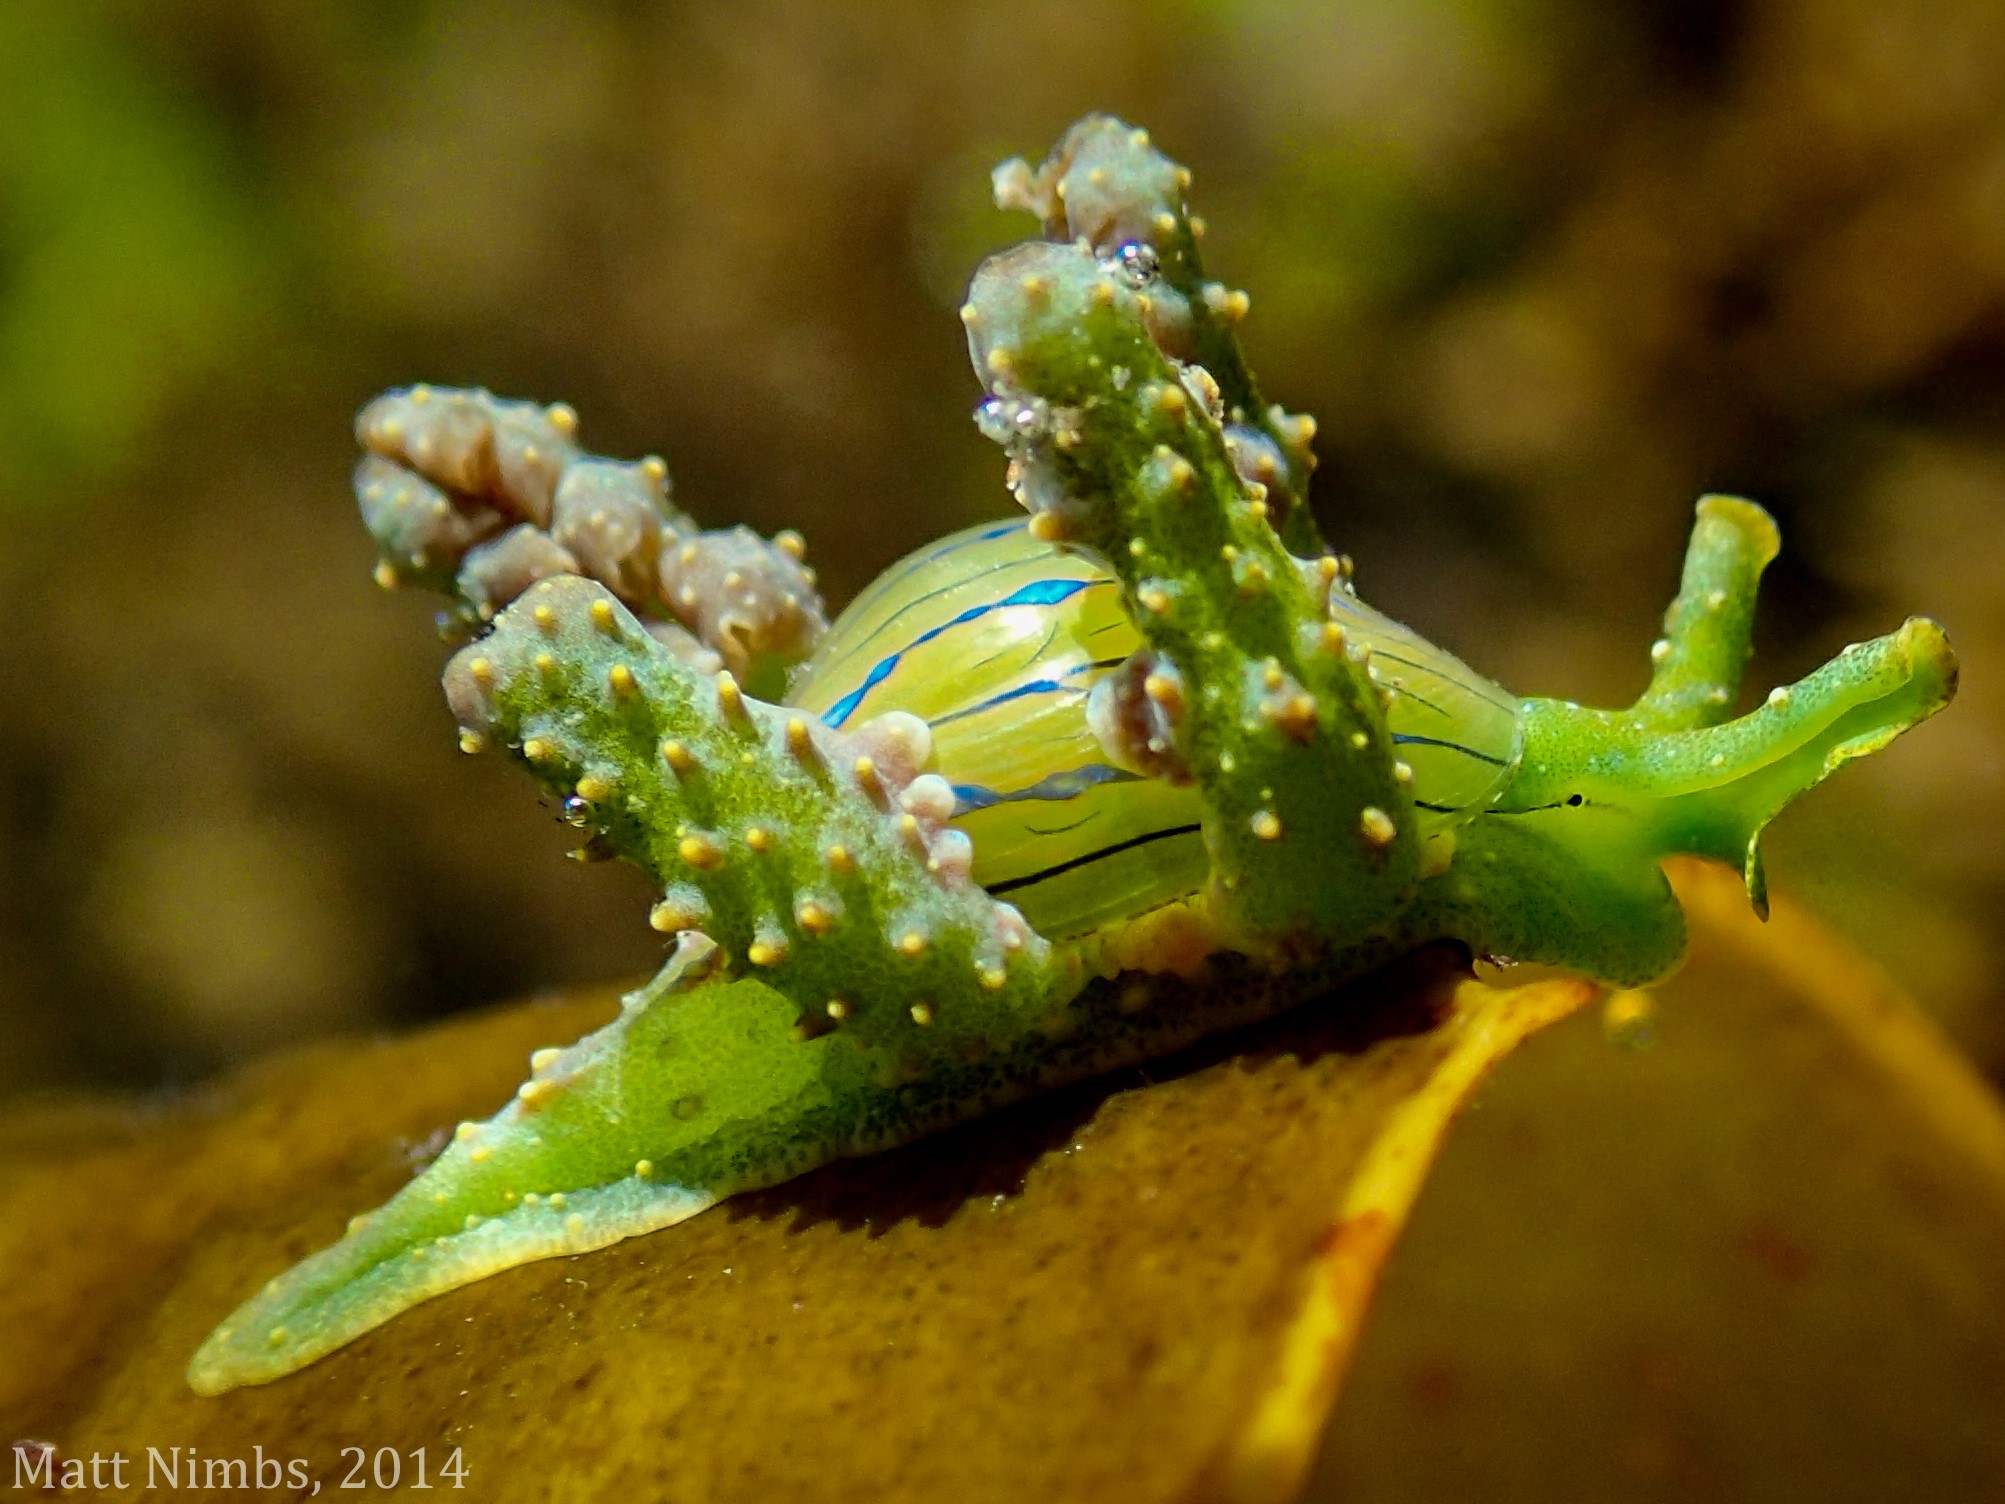 A brightly coloured sea slug